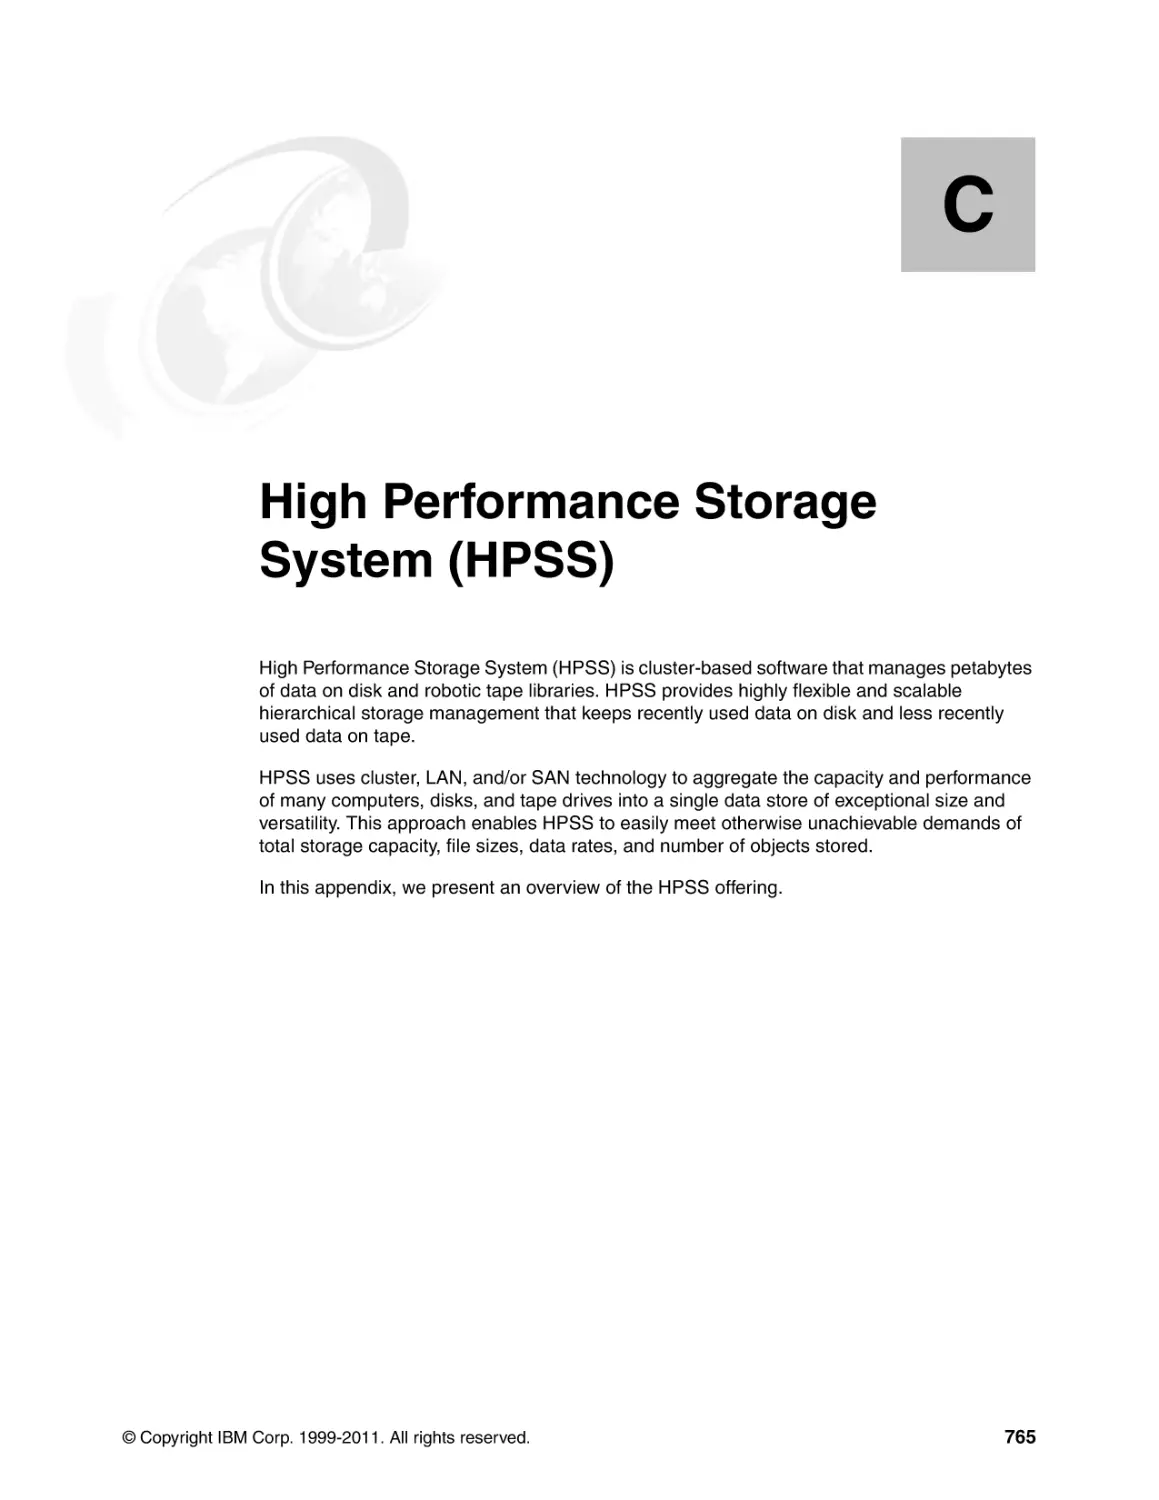 Appendix C. High Performance Storage System (HPSS)